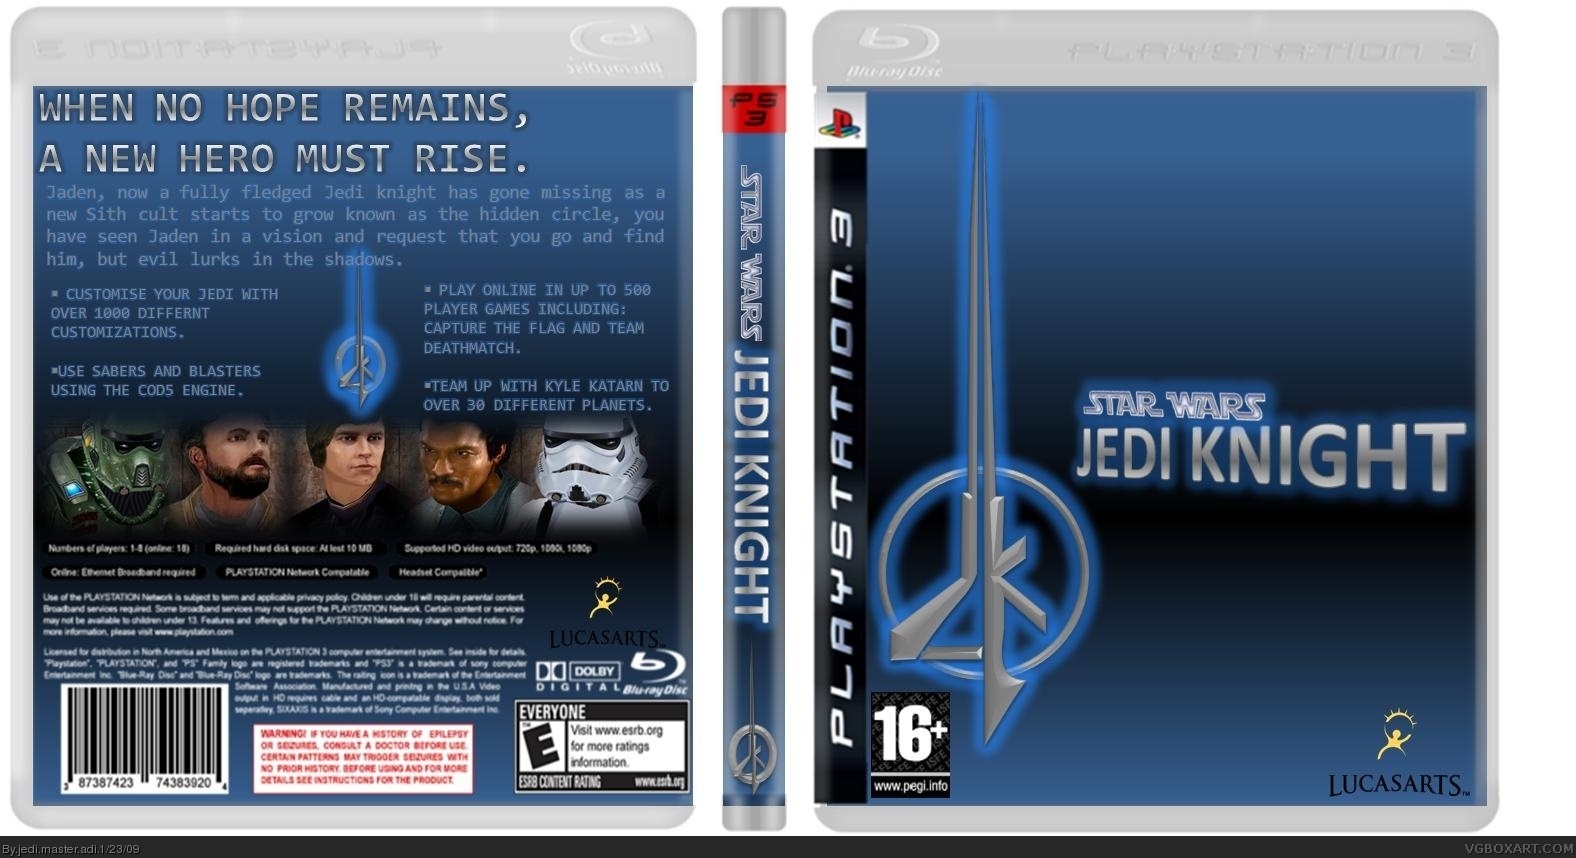 Star Wars: Jedi Knight 4 box cover